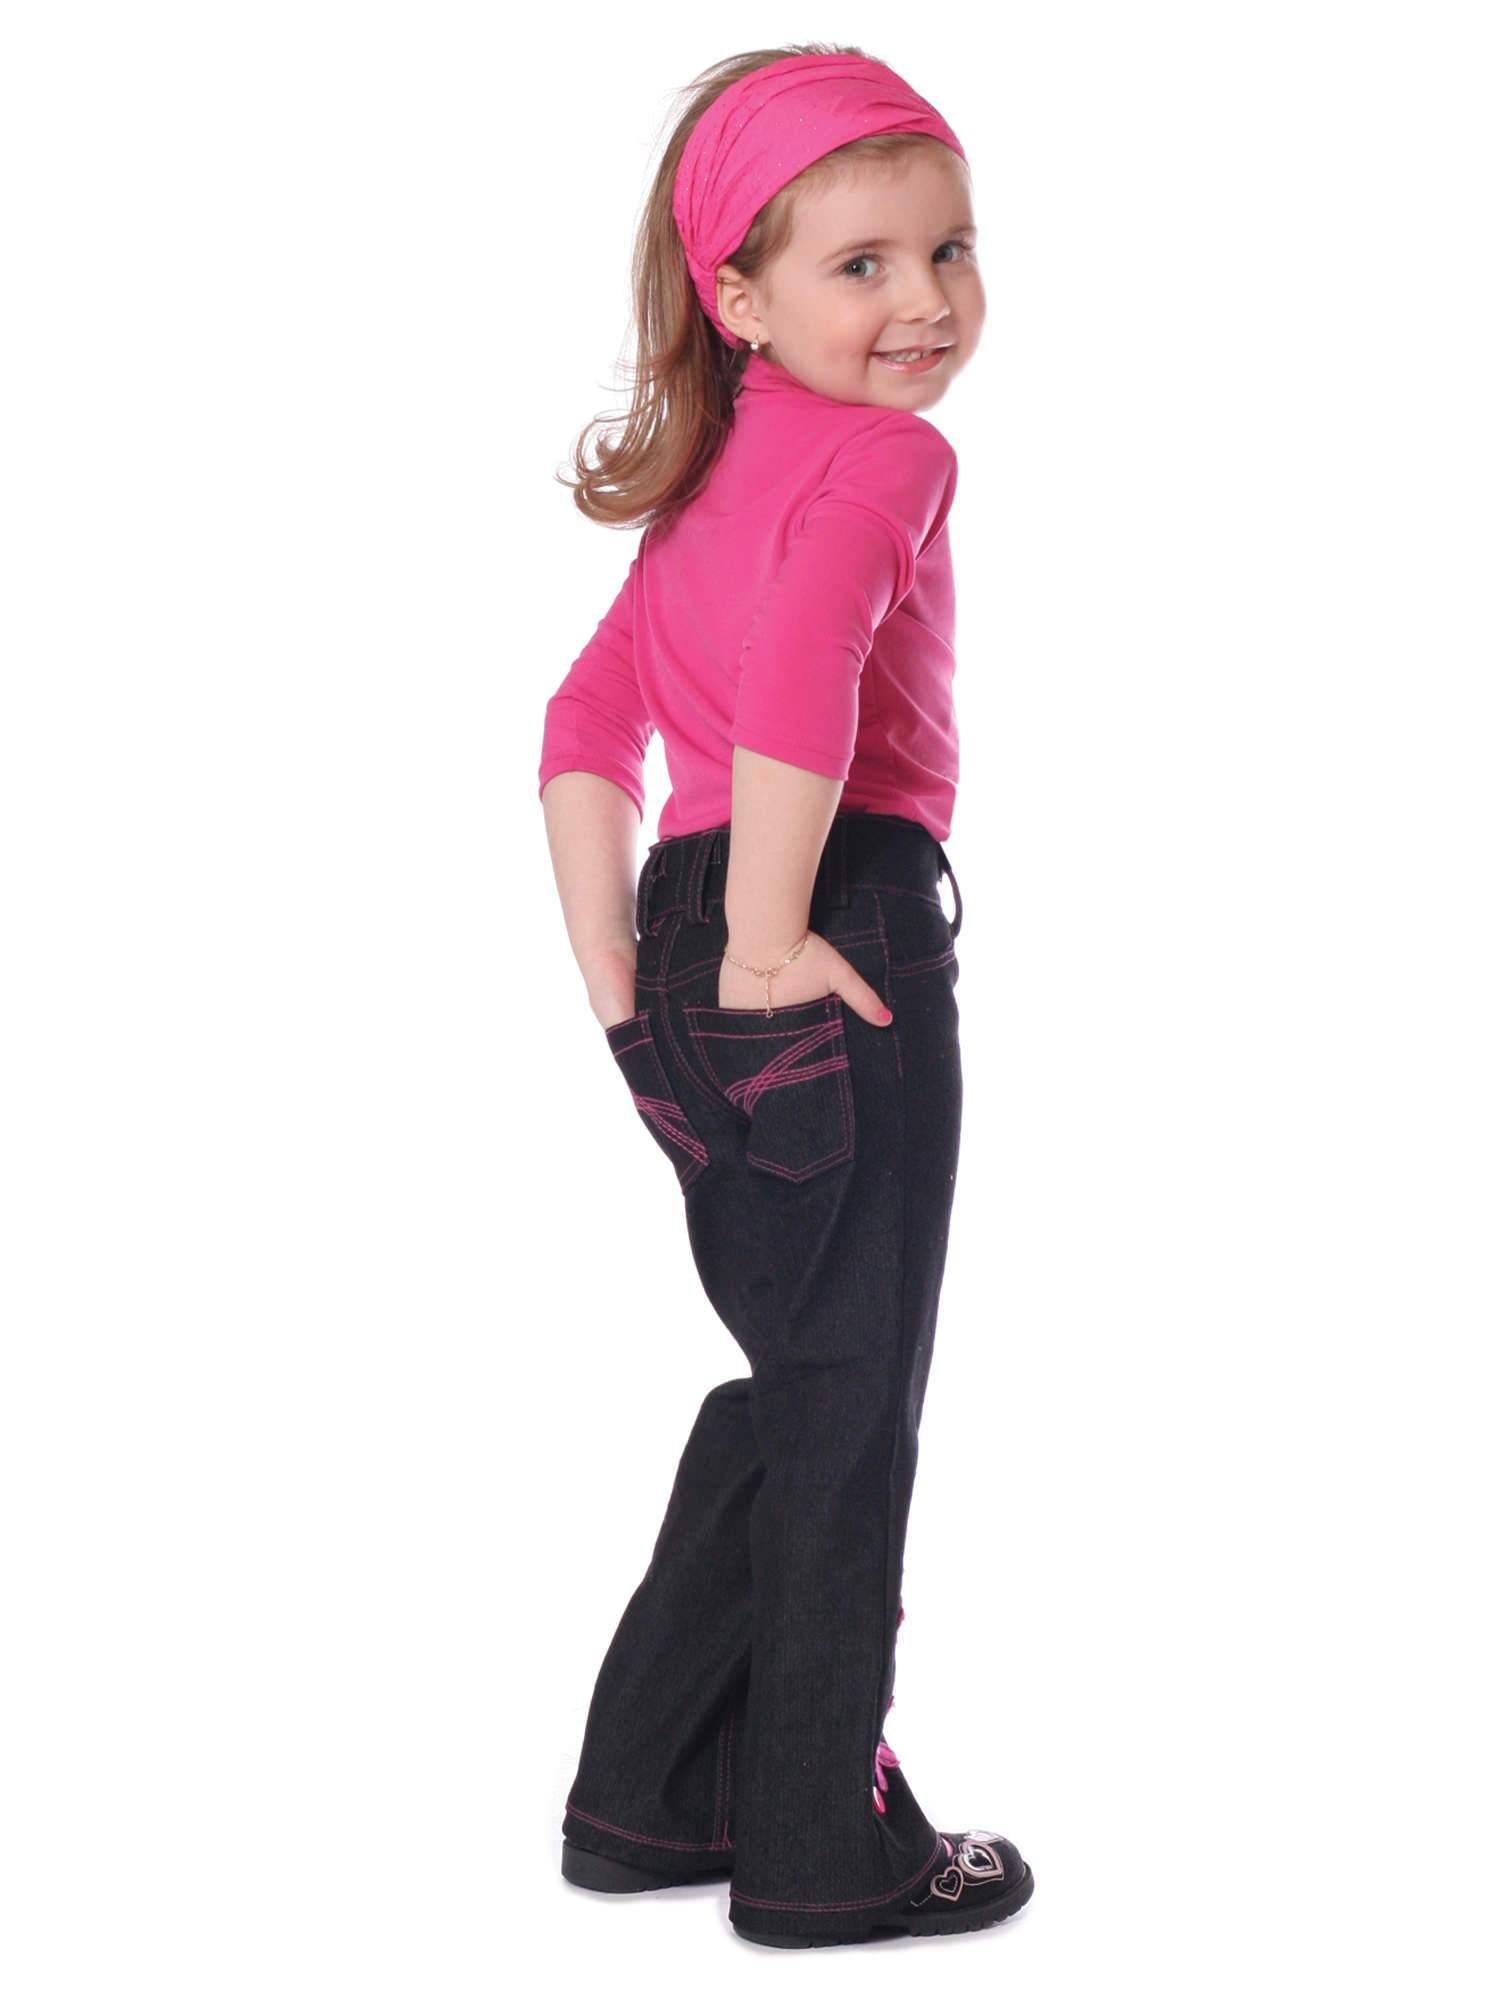 Jalie 2908 - Strech jeans patterns for kids